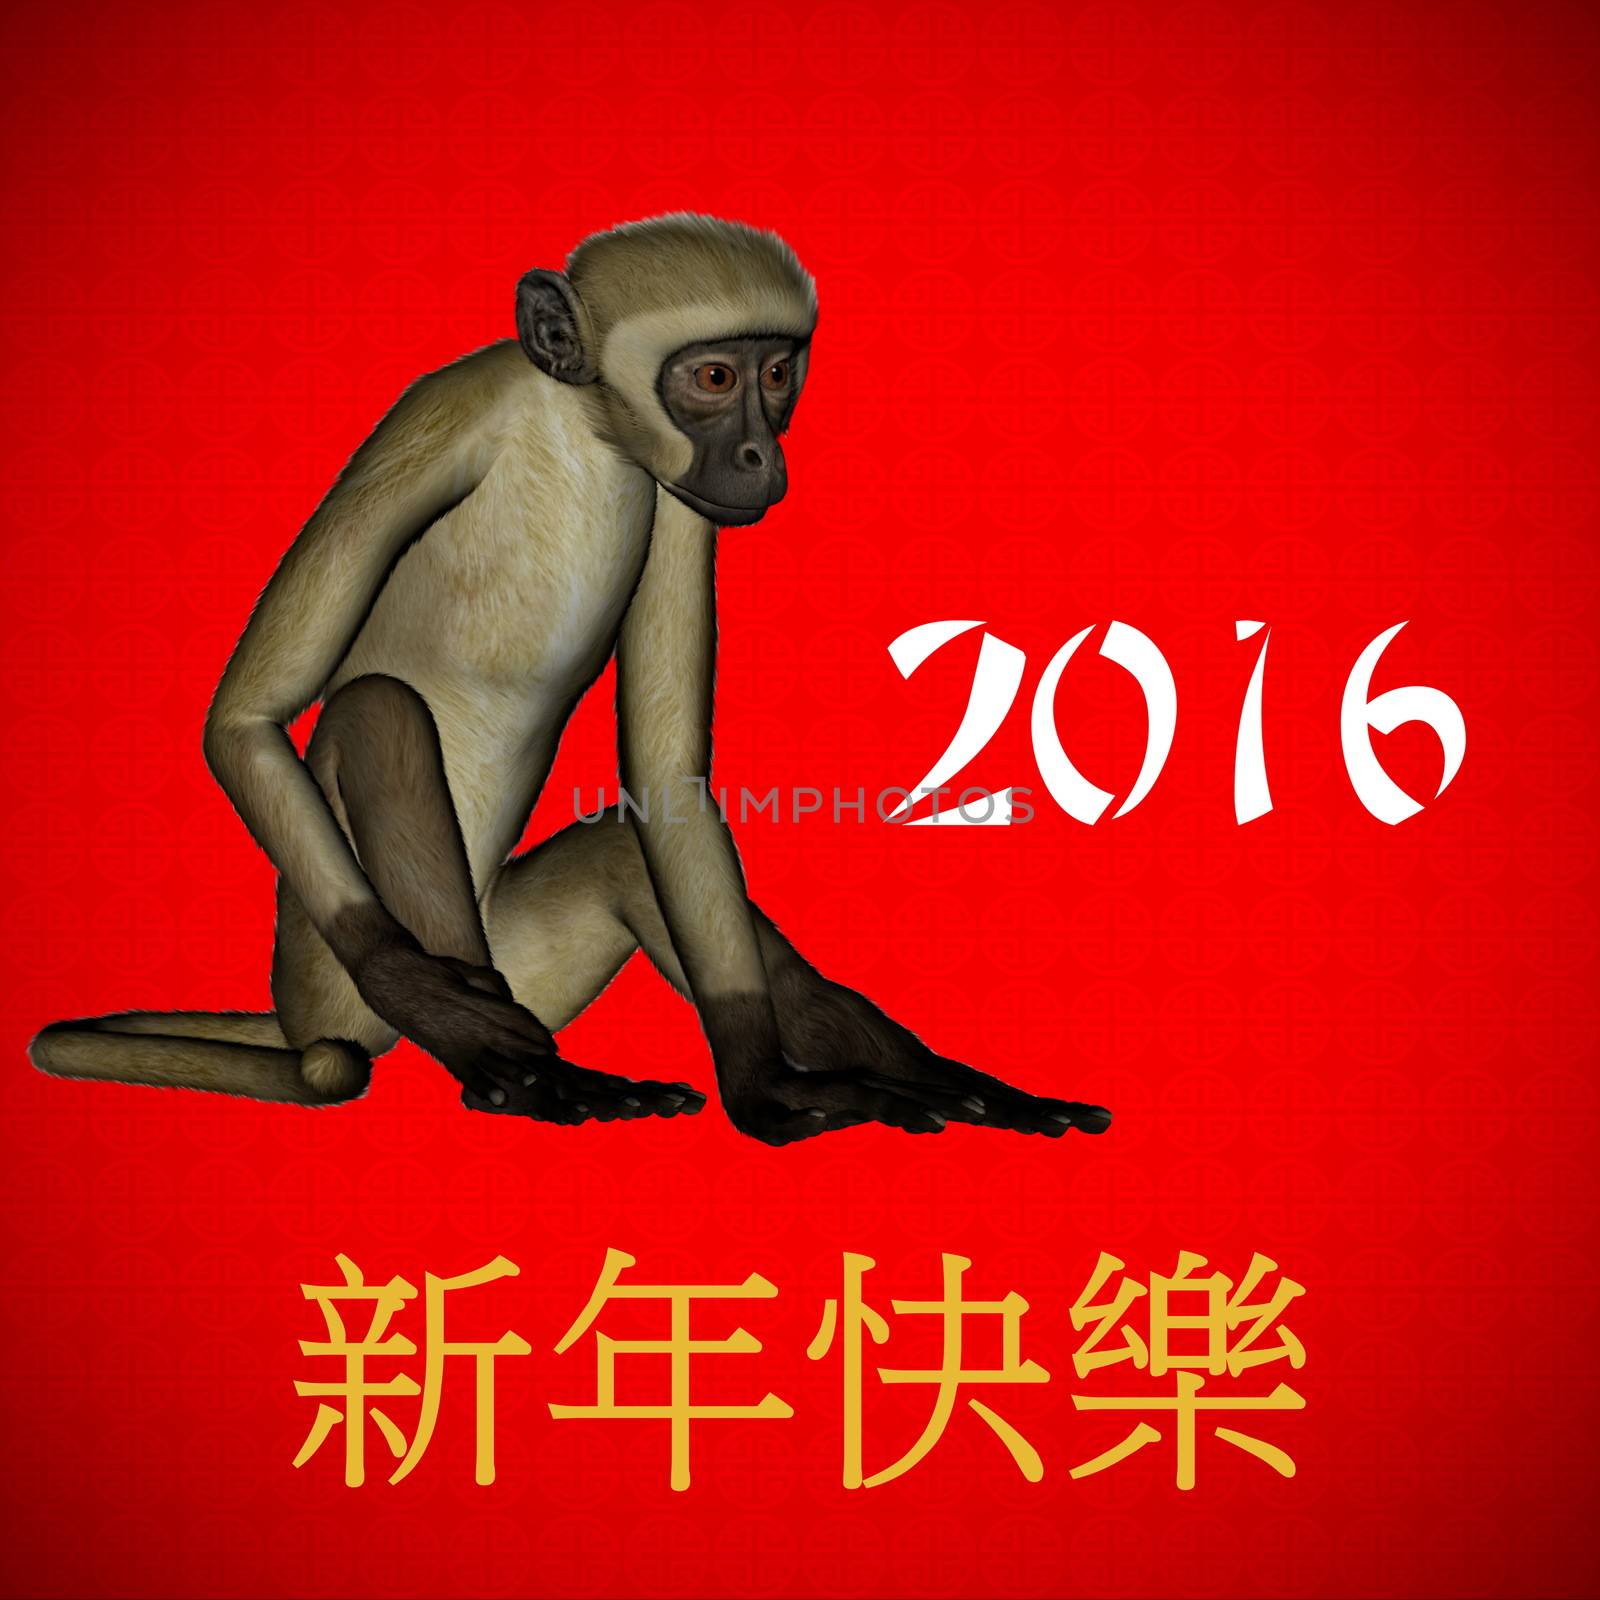 Happy New Chinese monkey Year, 2016 by Elenaphotos21